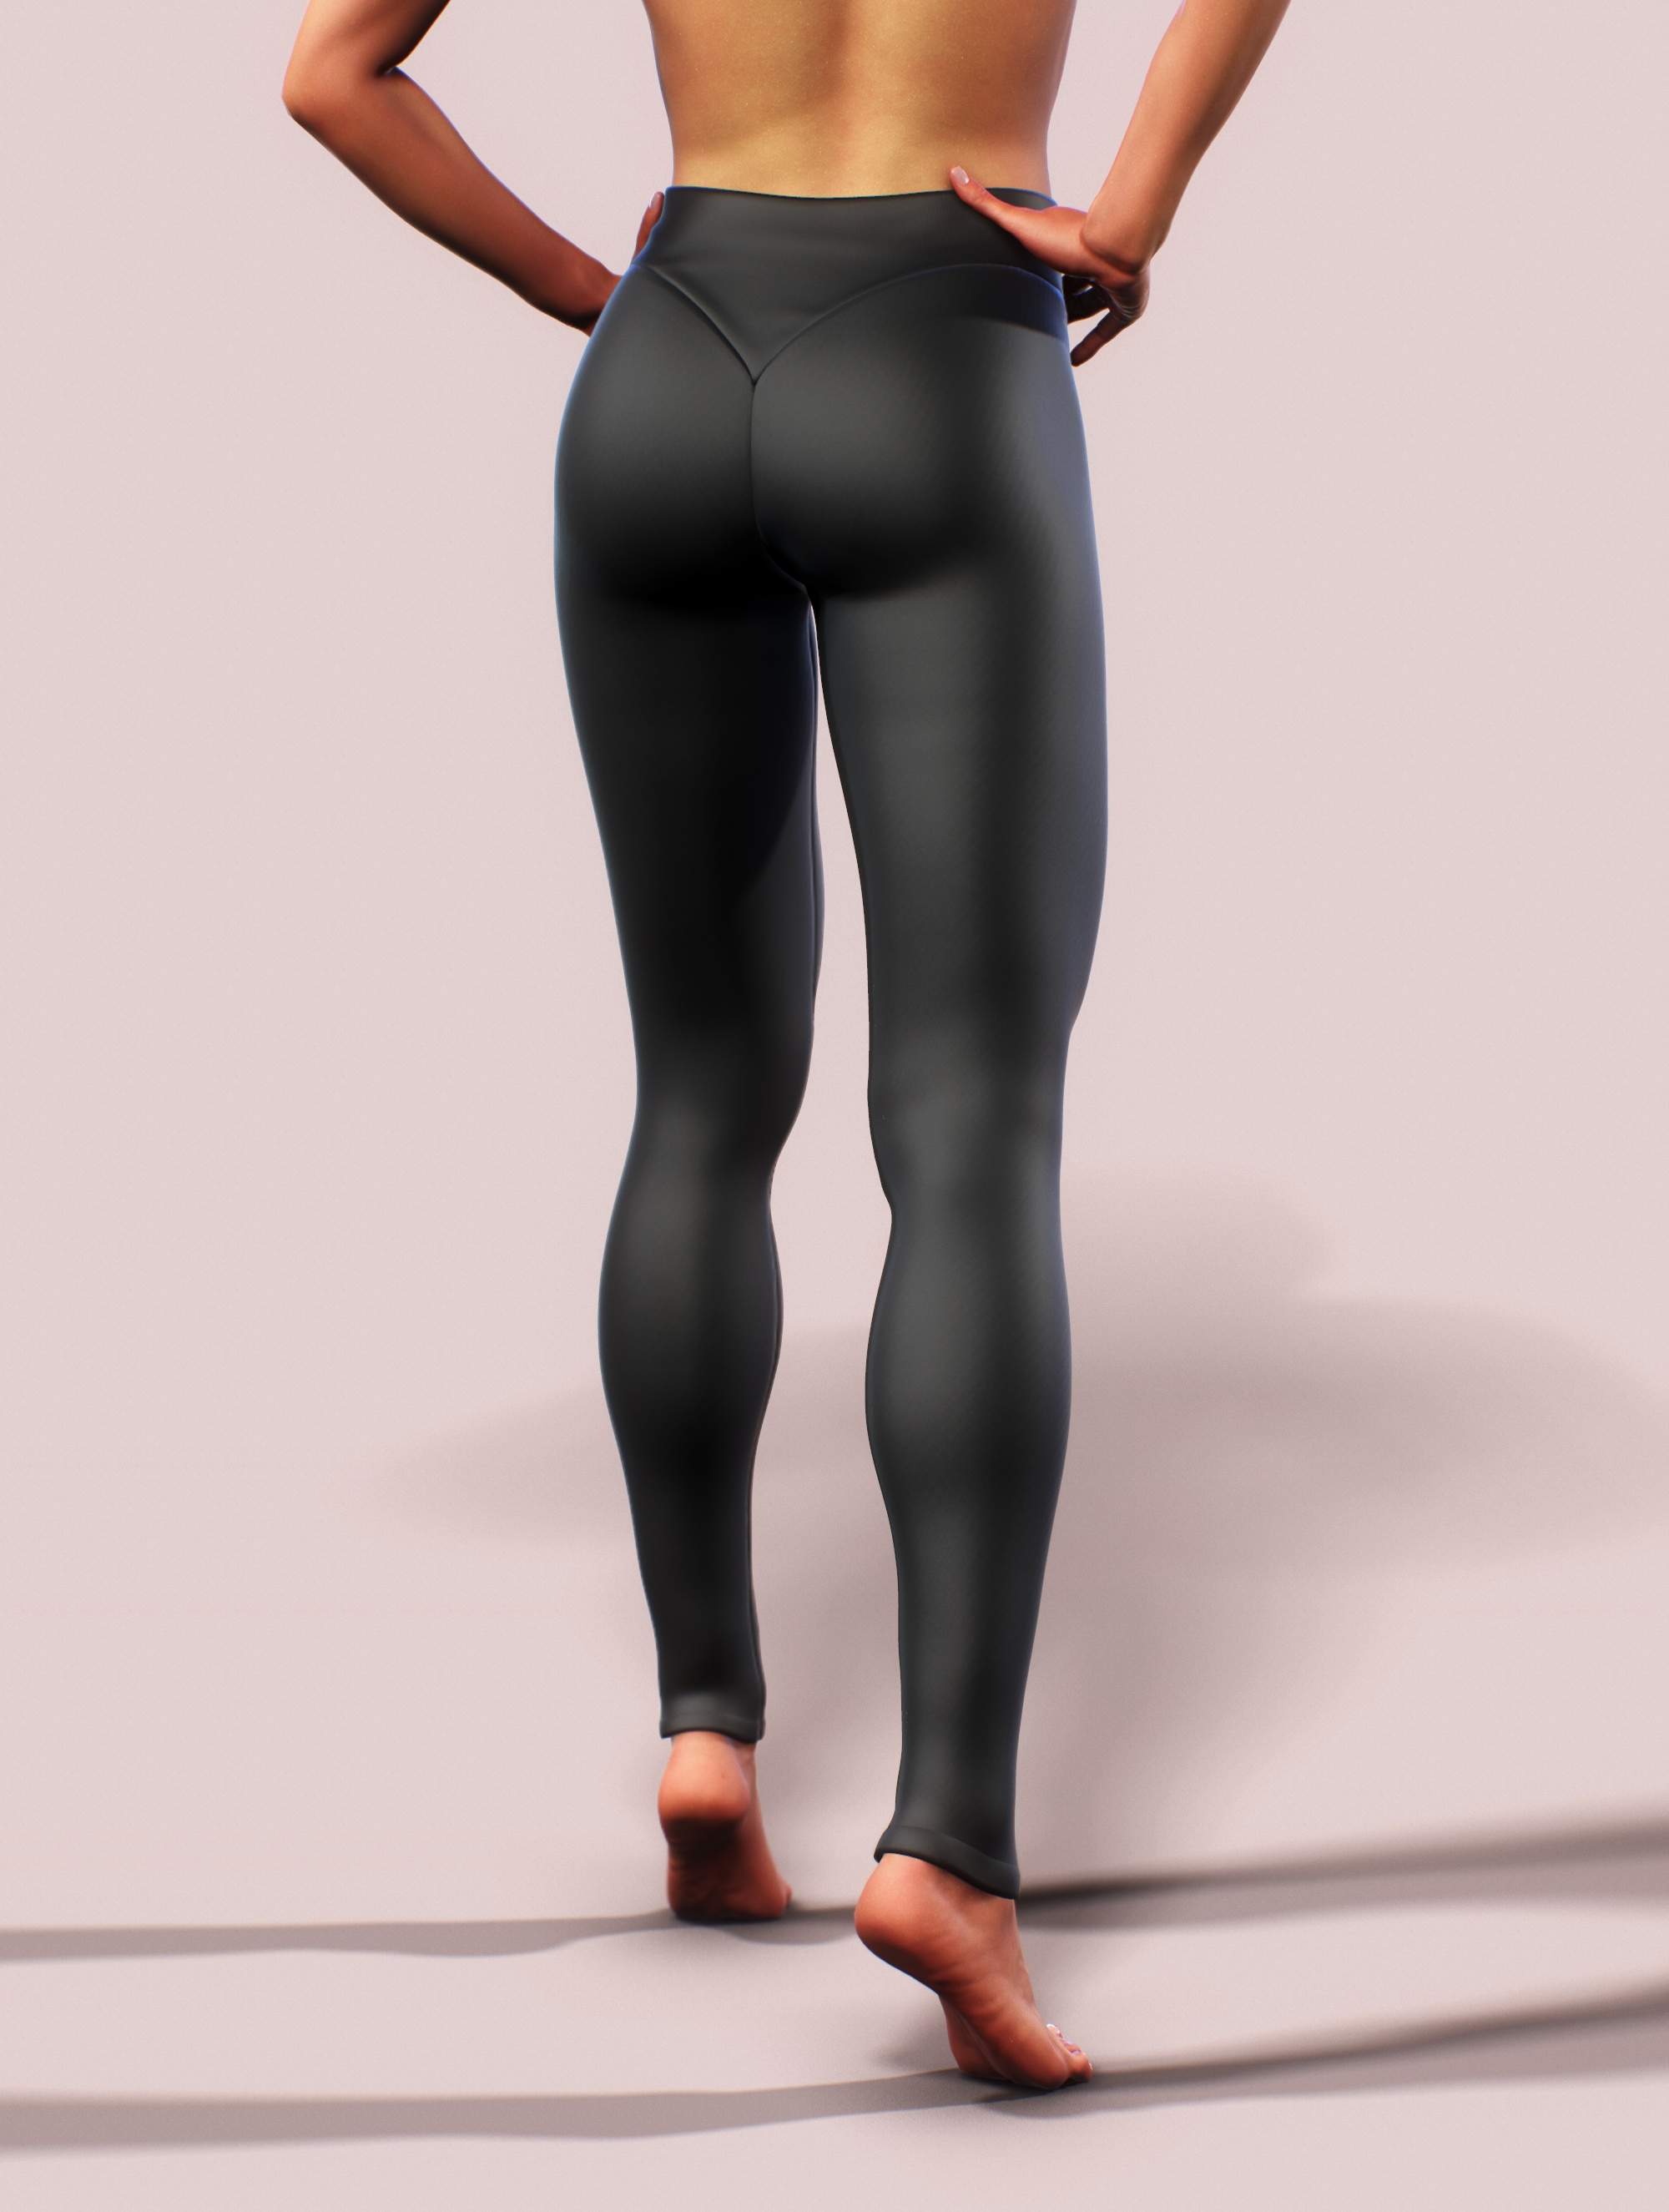 Booty Sculpted Black Shaping Leggings  Women's Classic Yoga Pants (XXS) at   Women's Clothing store